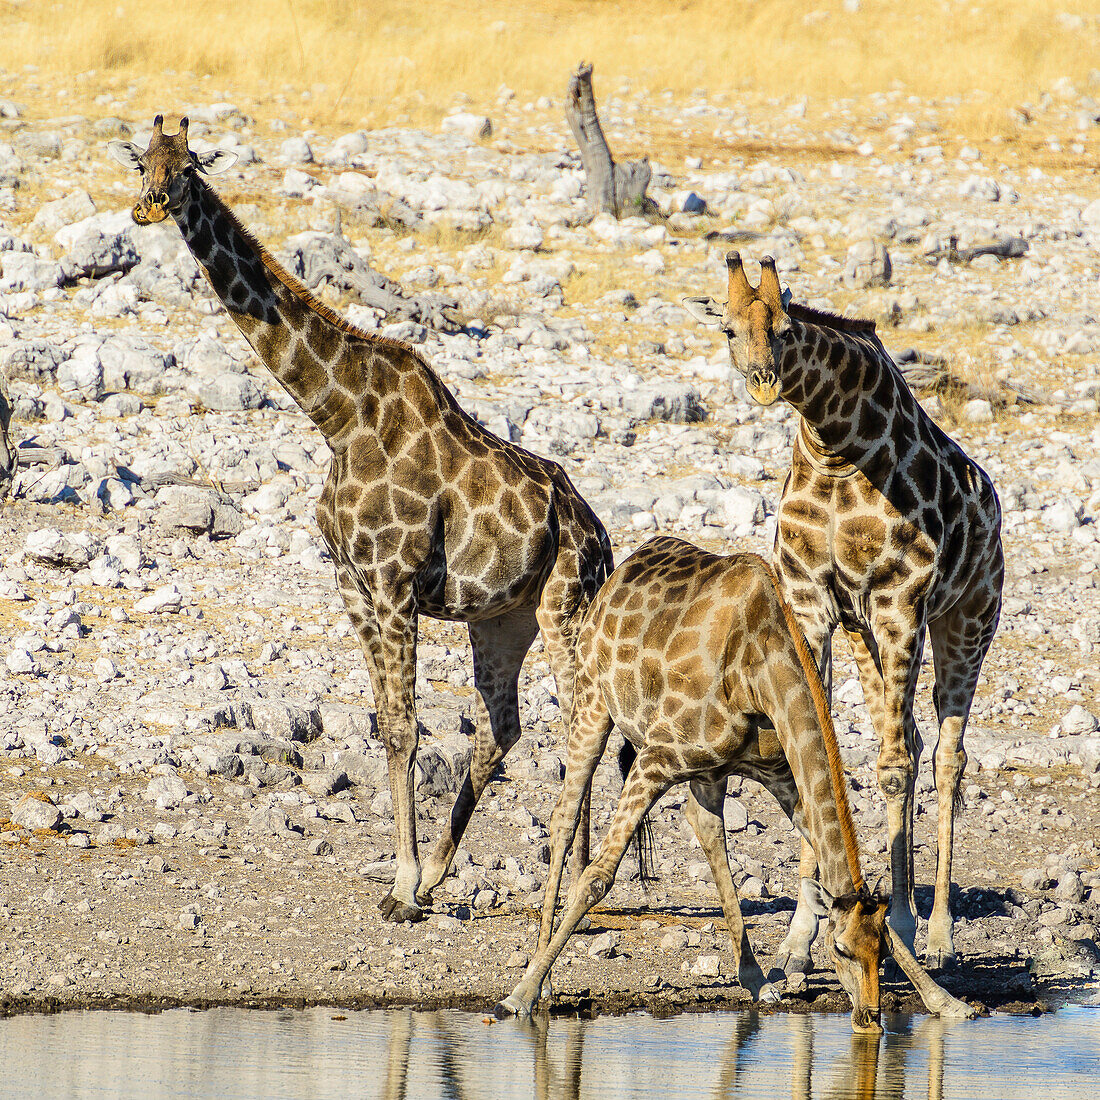 giraffe at a waterhole, Etosha National Park, Namibia, Africa